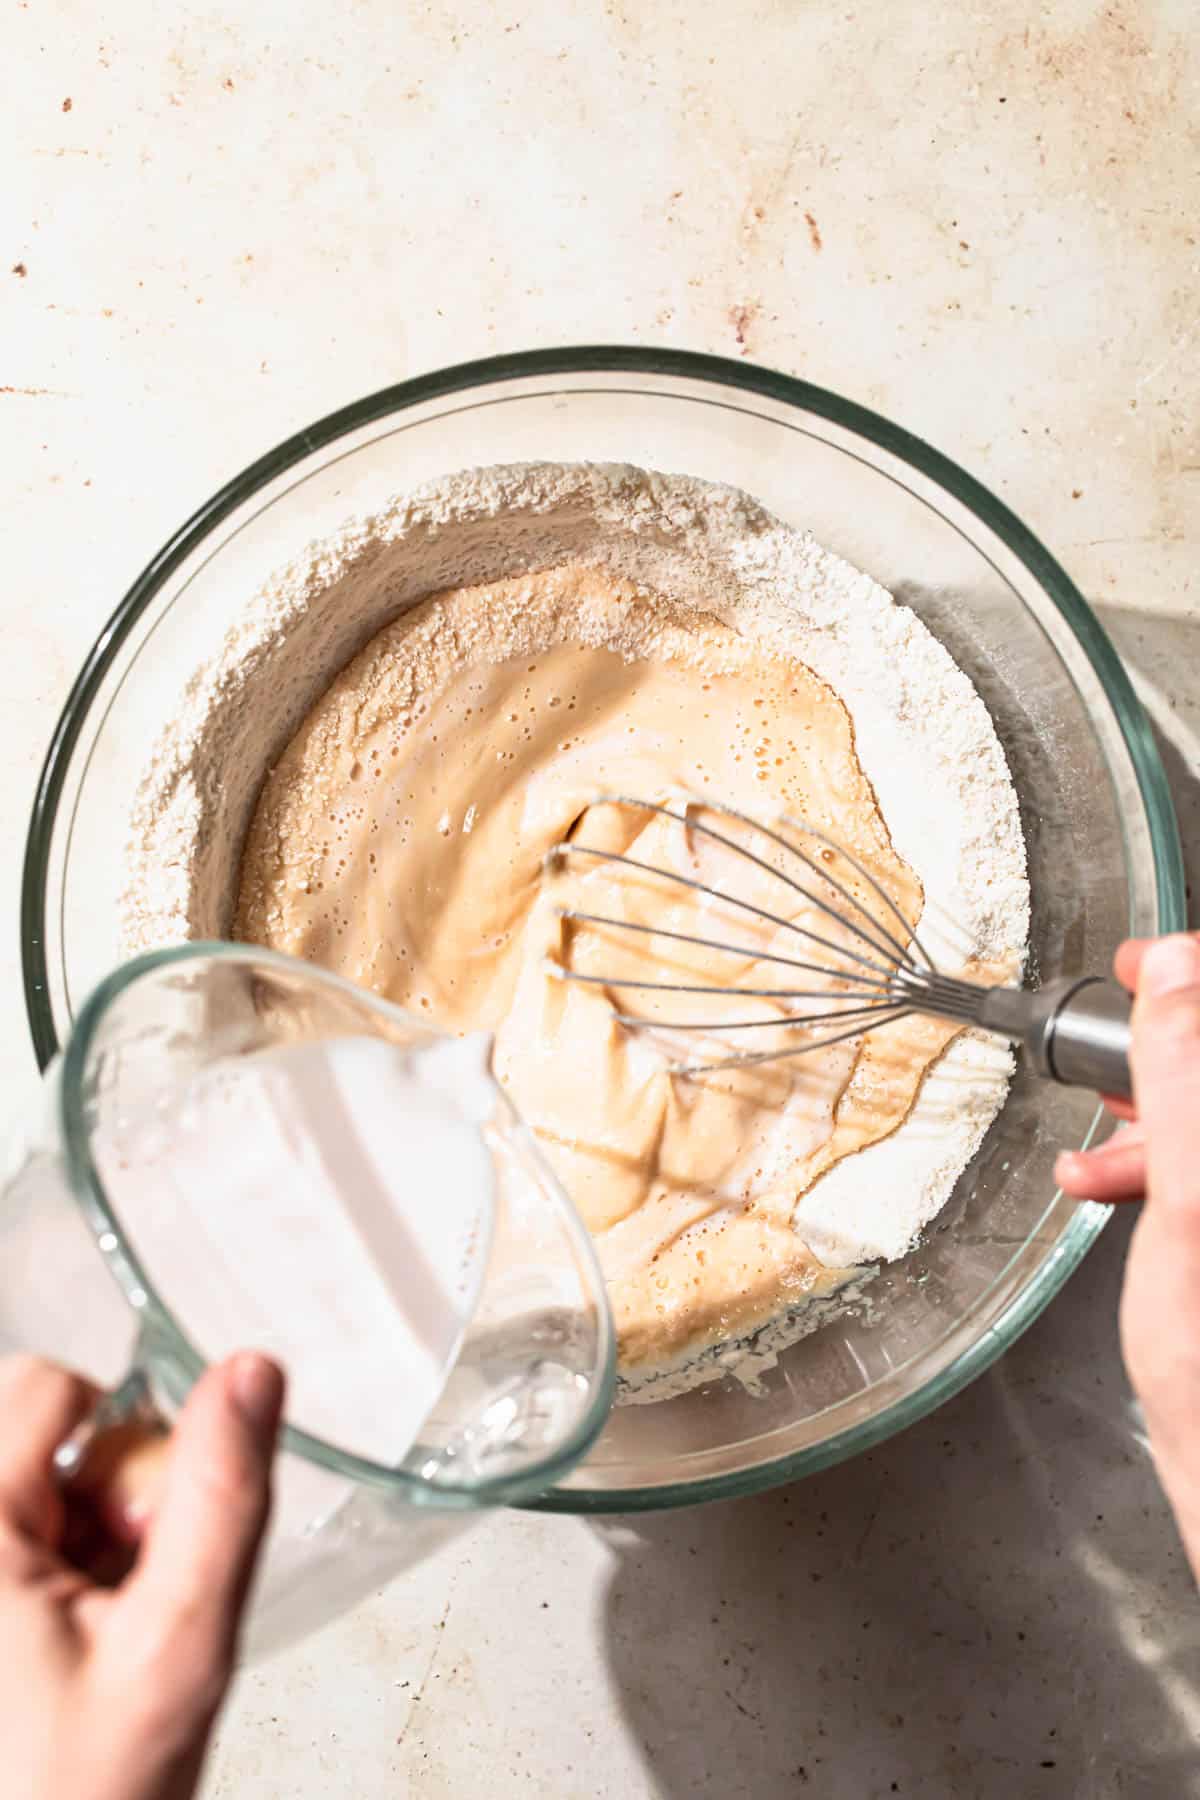 Pouring milk into flour to make pancake batter mixture while whisking.